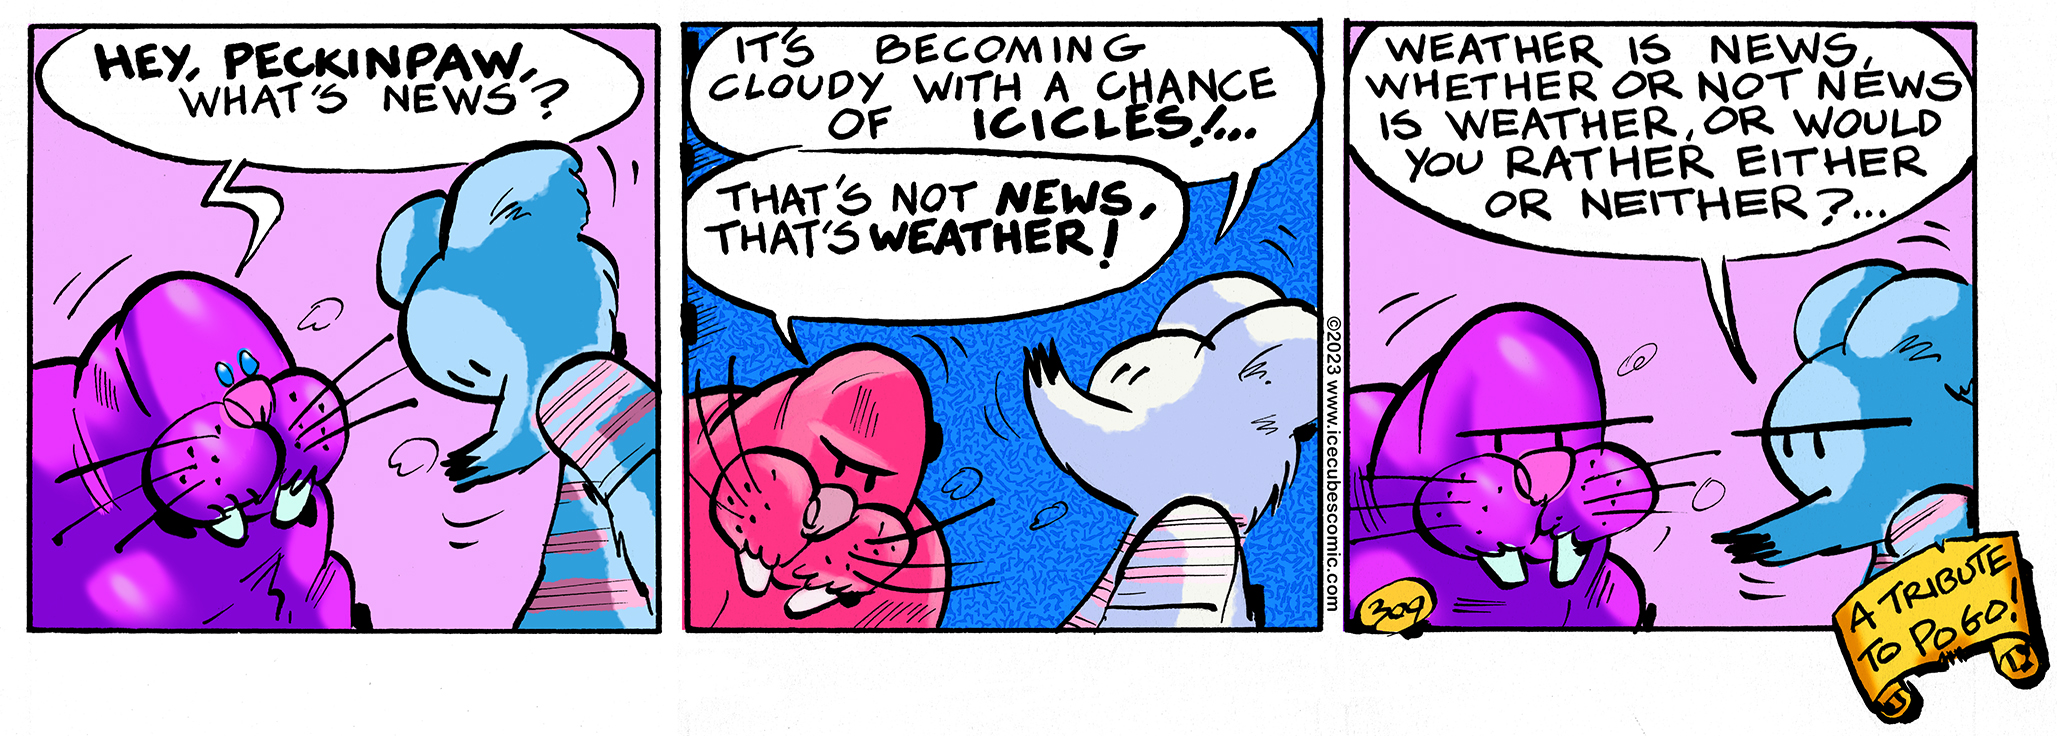 ICECUBES the comic strip #309